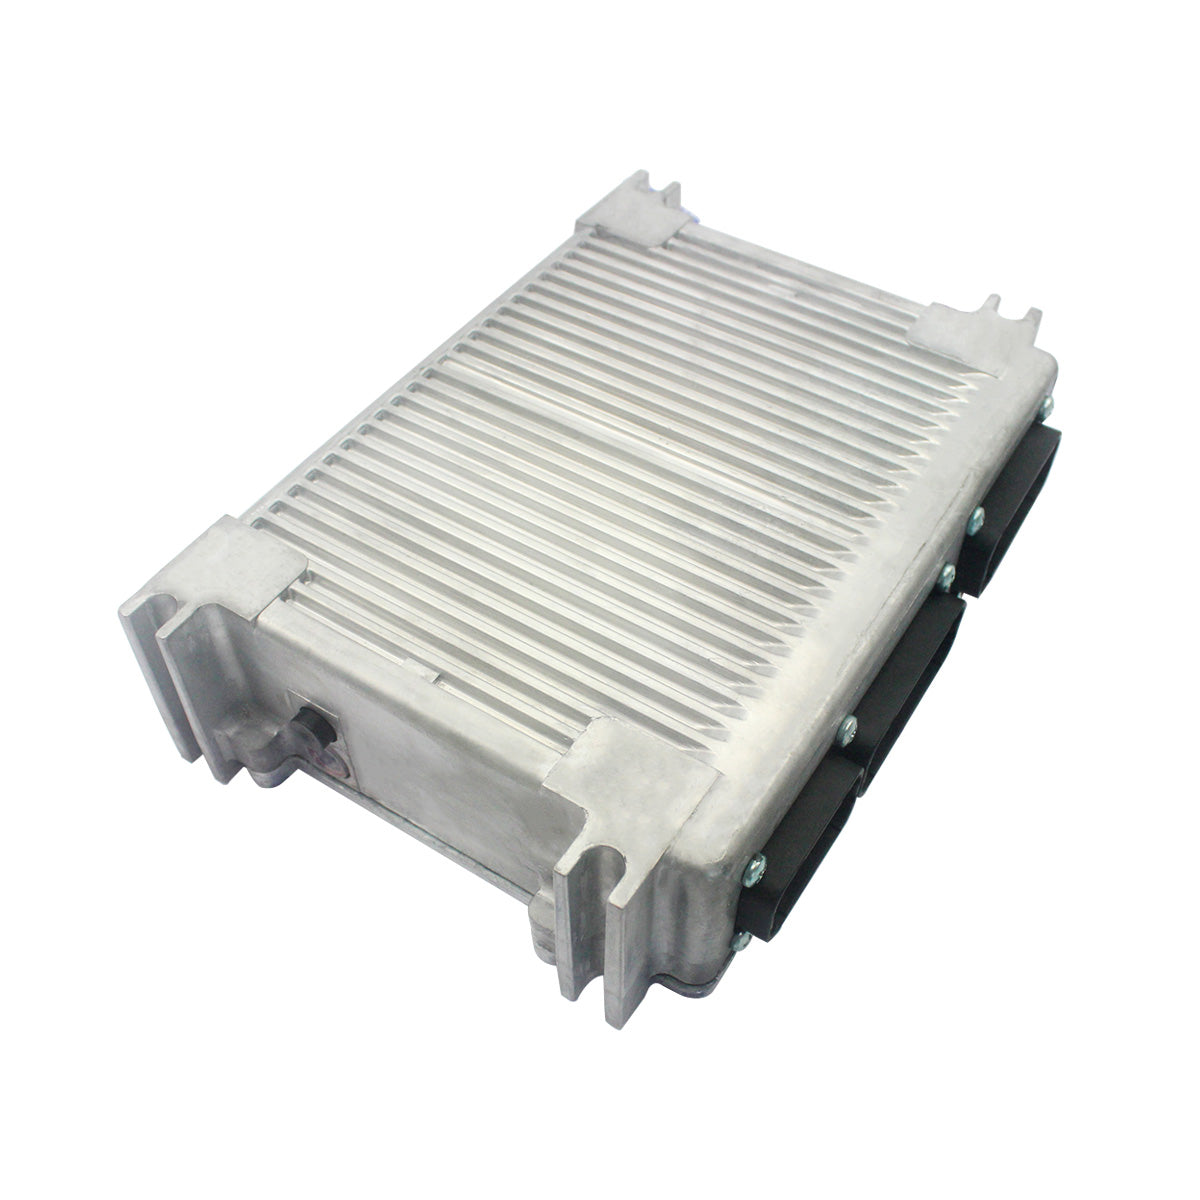 7835-28-3002 ECU Controller for Komatsu PC400-7 PC450-7 PC600-7 PC800-7 - Sinocmp